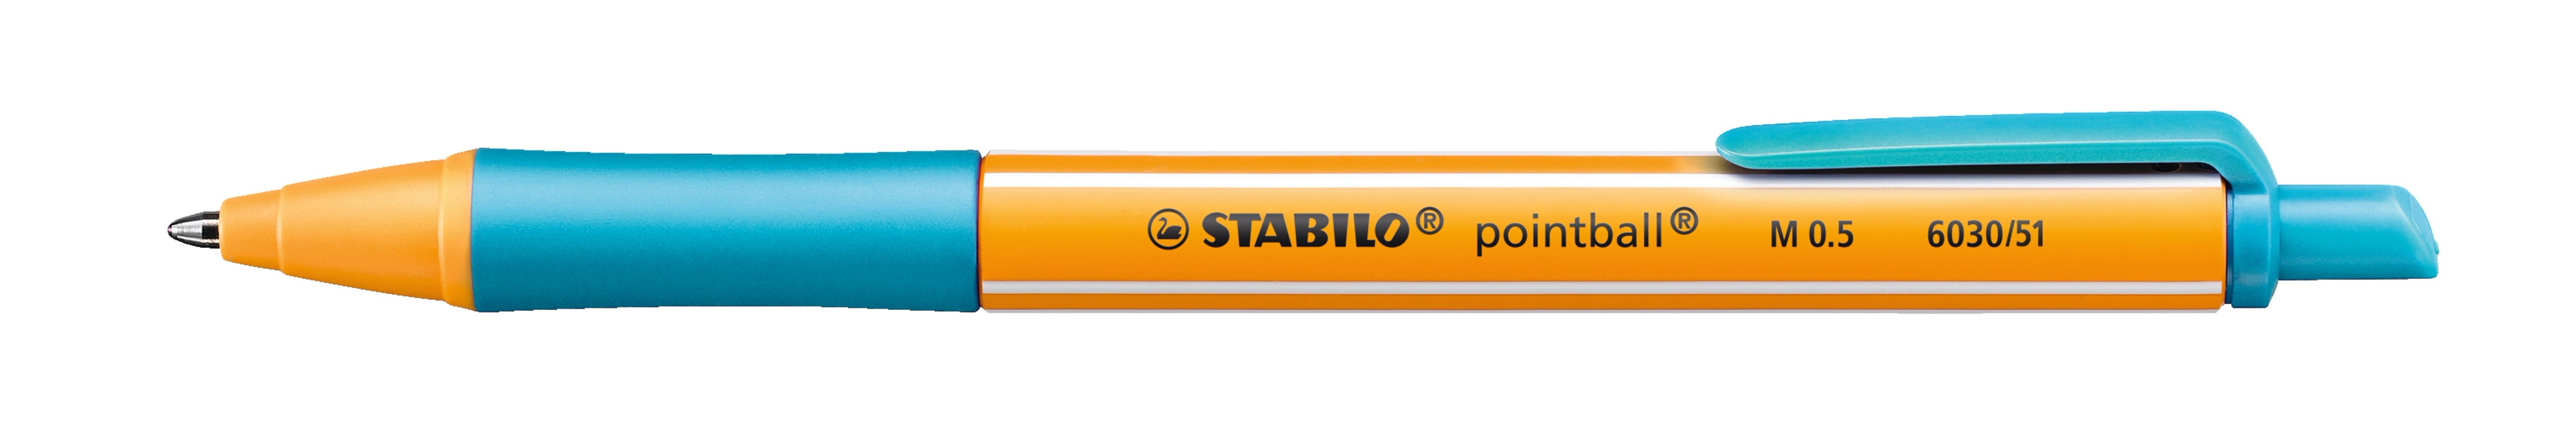 STABILO pointball Pen, Turquoise